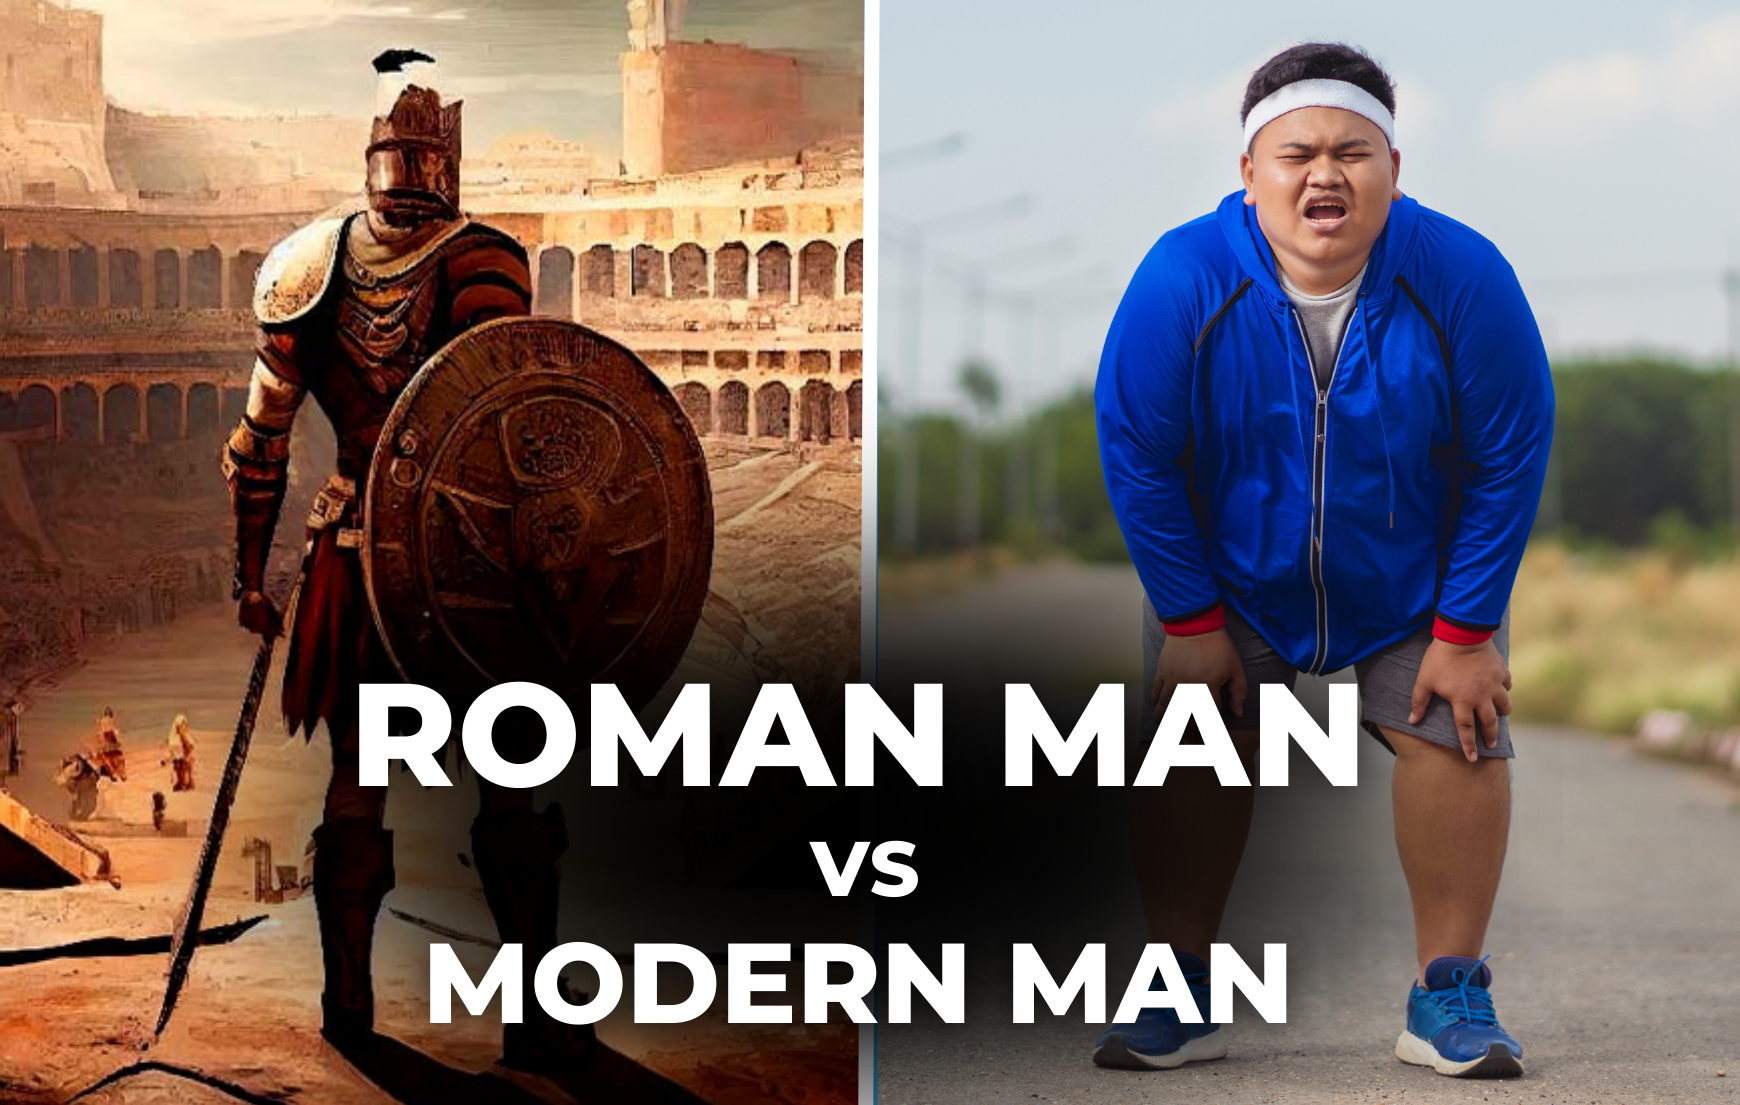 Typical Roman Man vs Modern Man: Why the Modern Man Falls Short